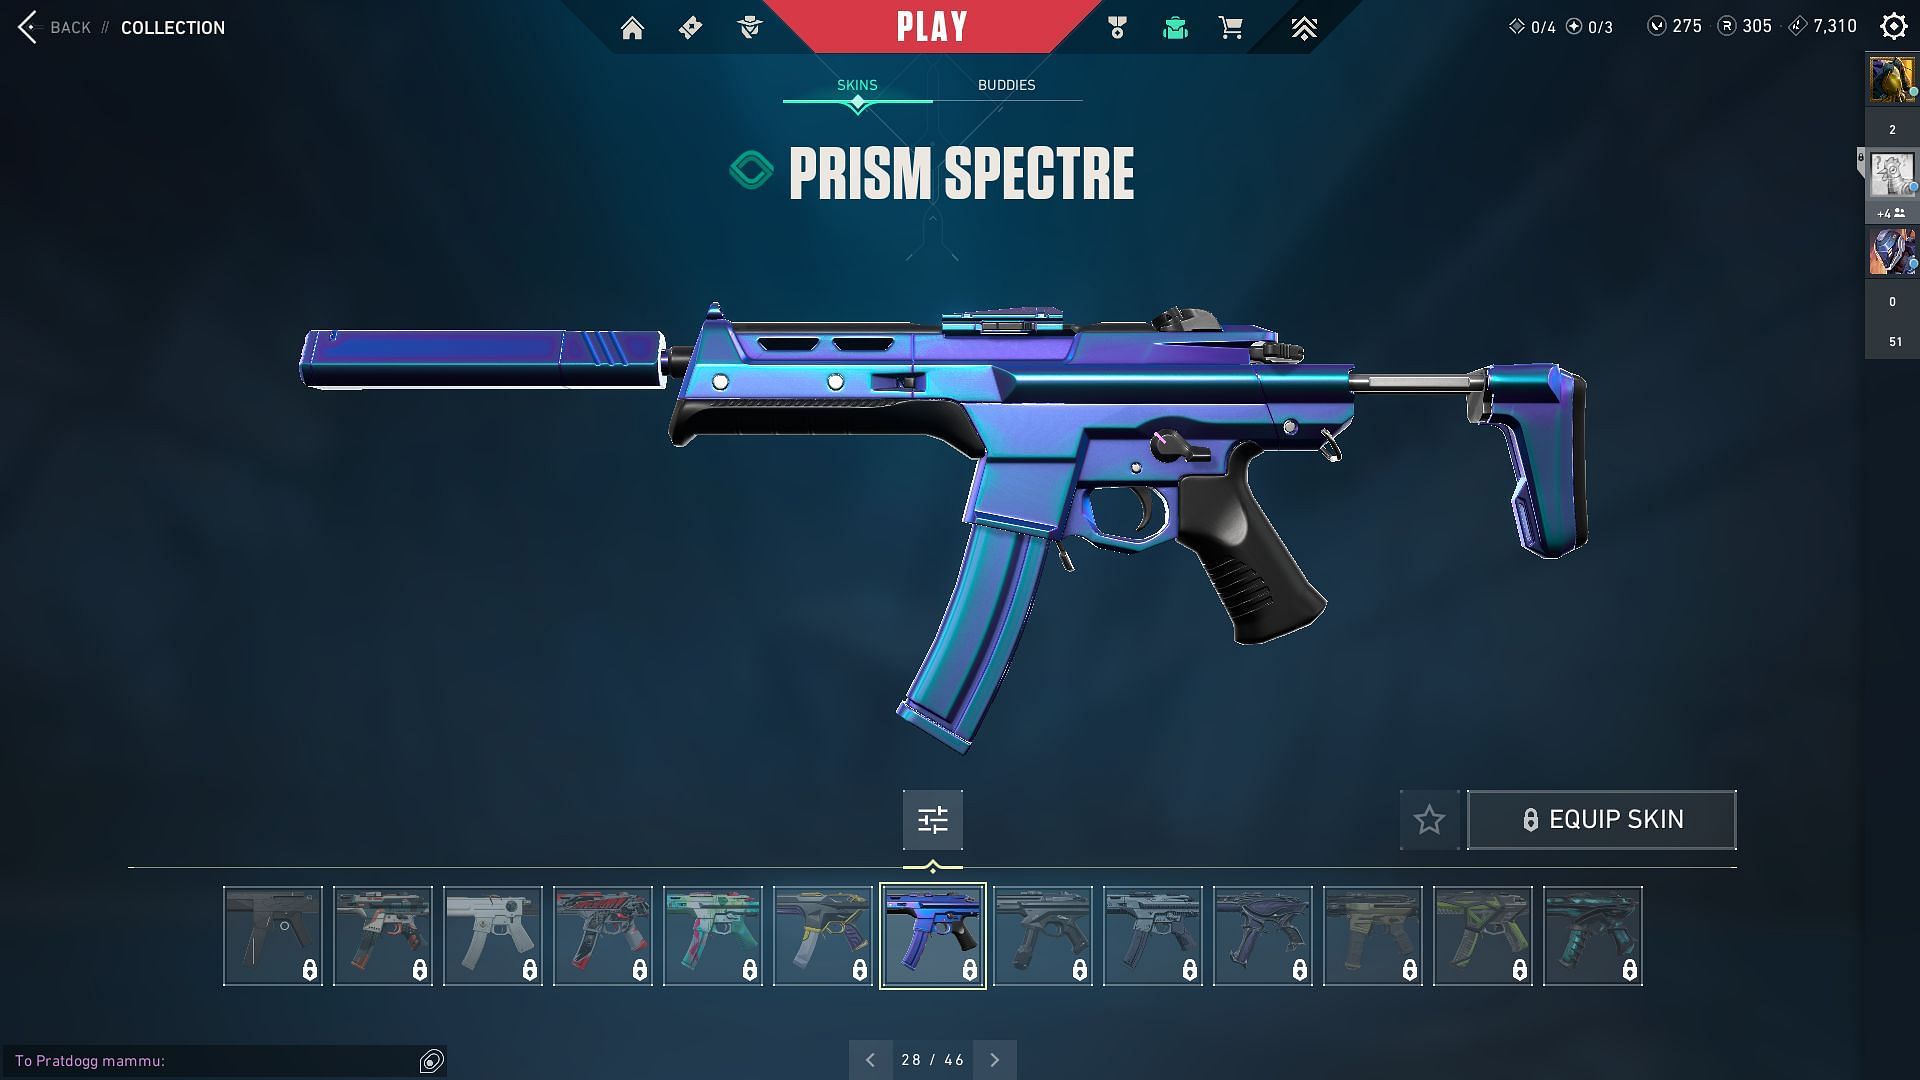 Prism Spectre (Image via Sportskeeda and Riot Games)